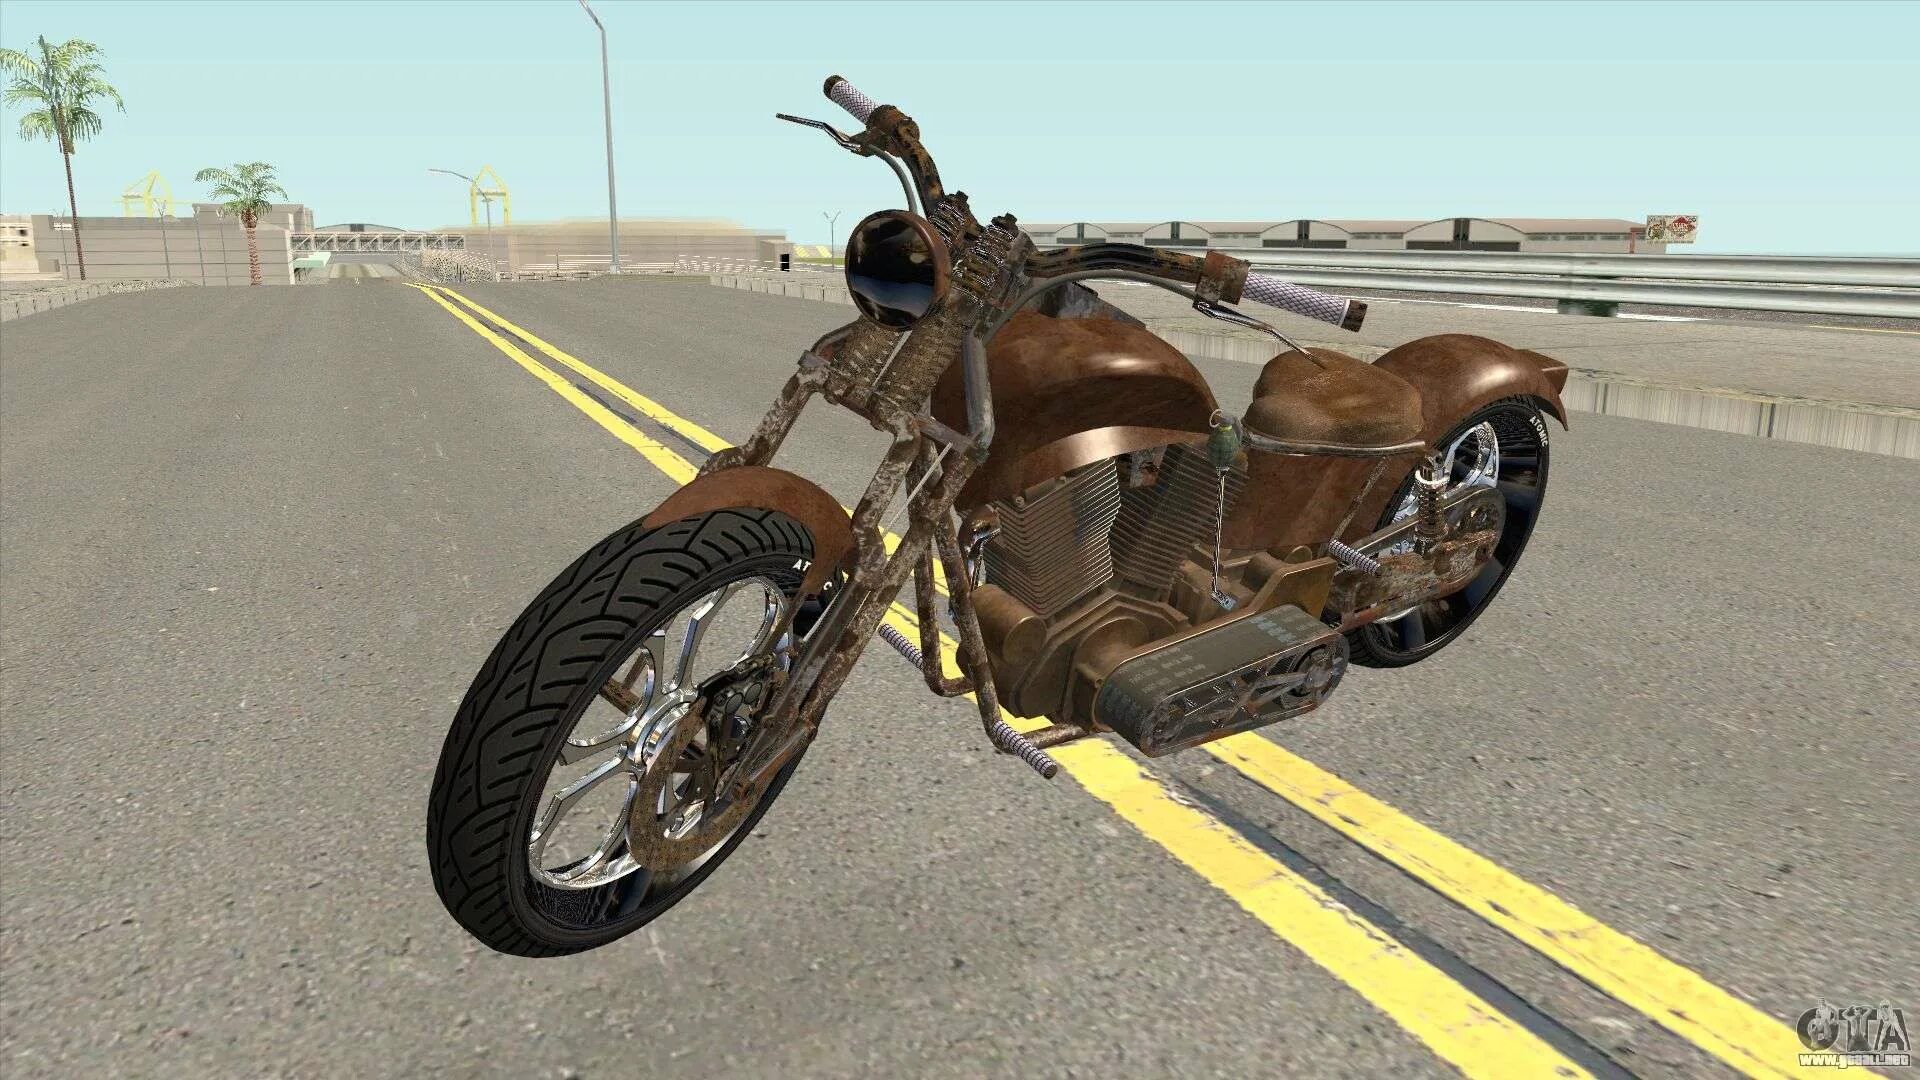 Rat Bike GTA 5. GTA San Andreas мотоциклы. Мотоцикл ГТА 5 Сан андреас. ГТА Сан андреас баба мотоцикл. Коды в гта сан андреас на мотоцикл